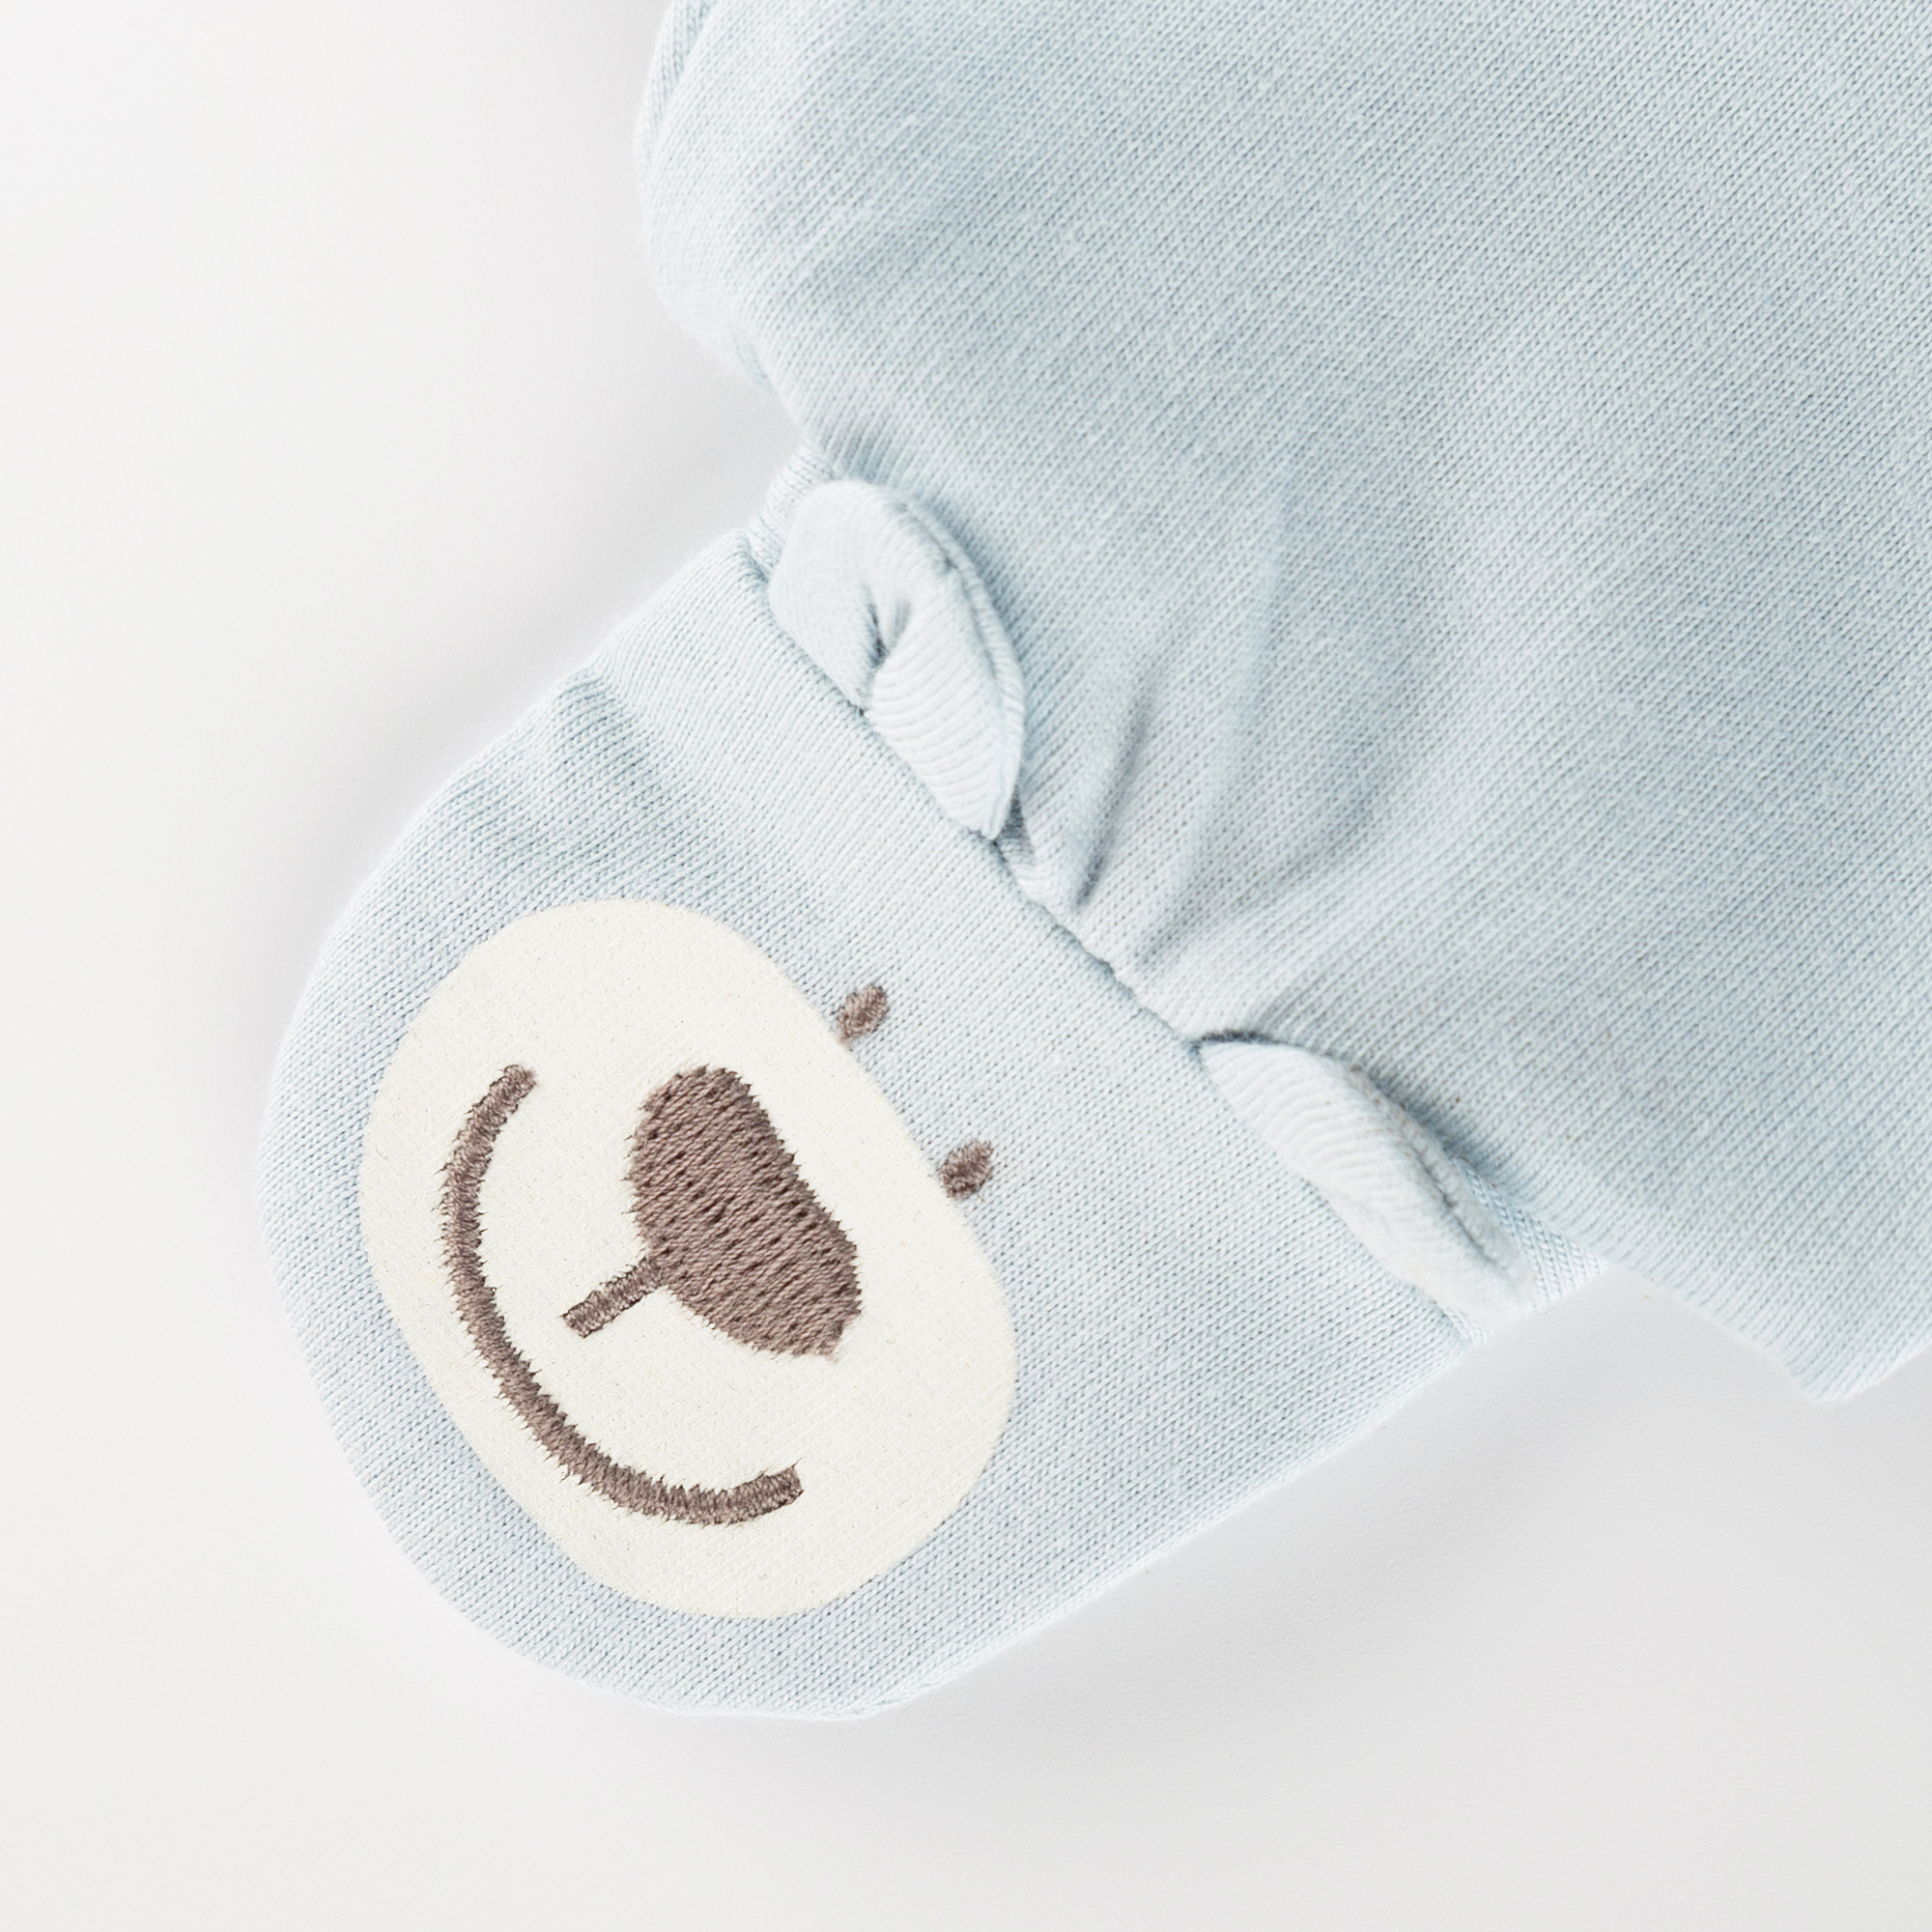 Newborn baby footie pants with bear face feet, blue